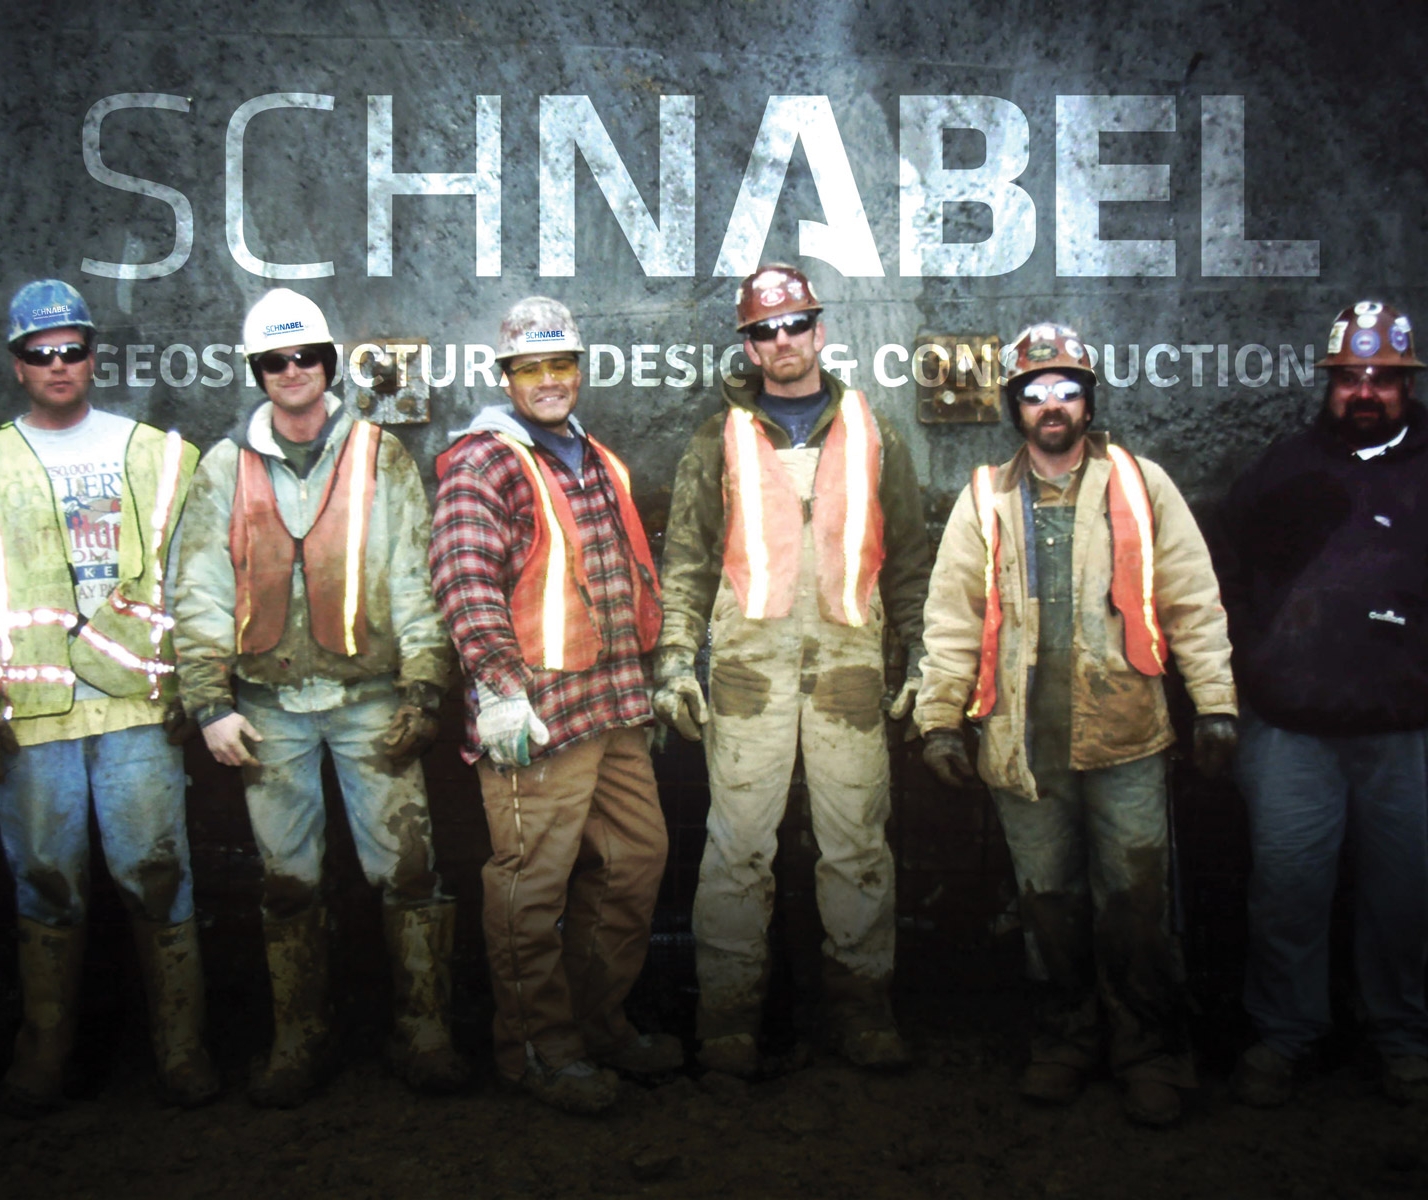 Schnabel Construction Company